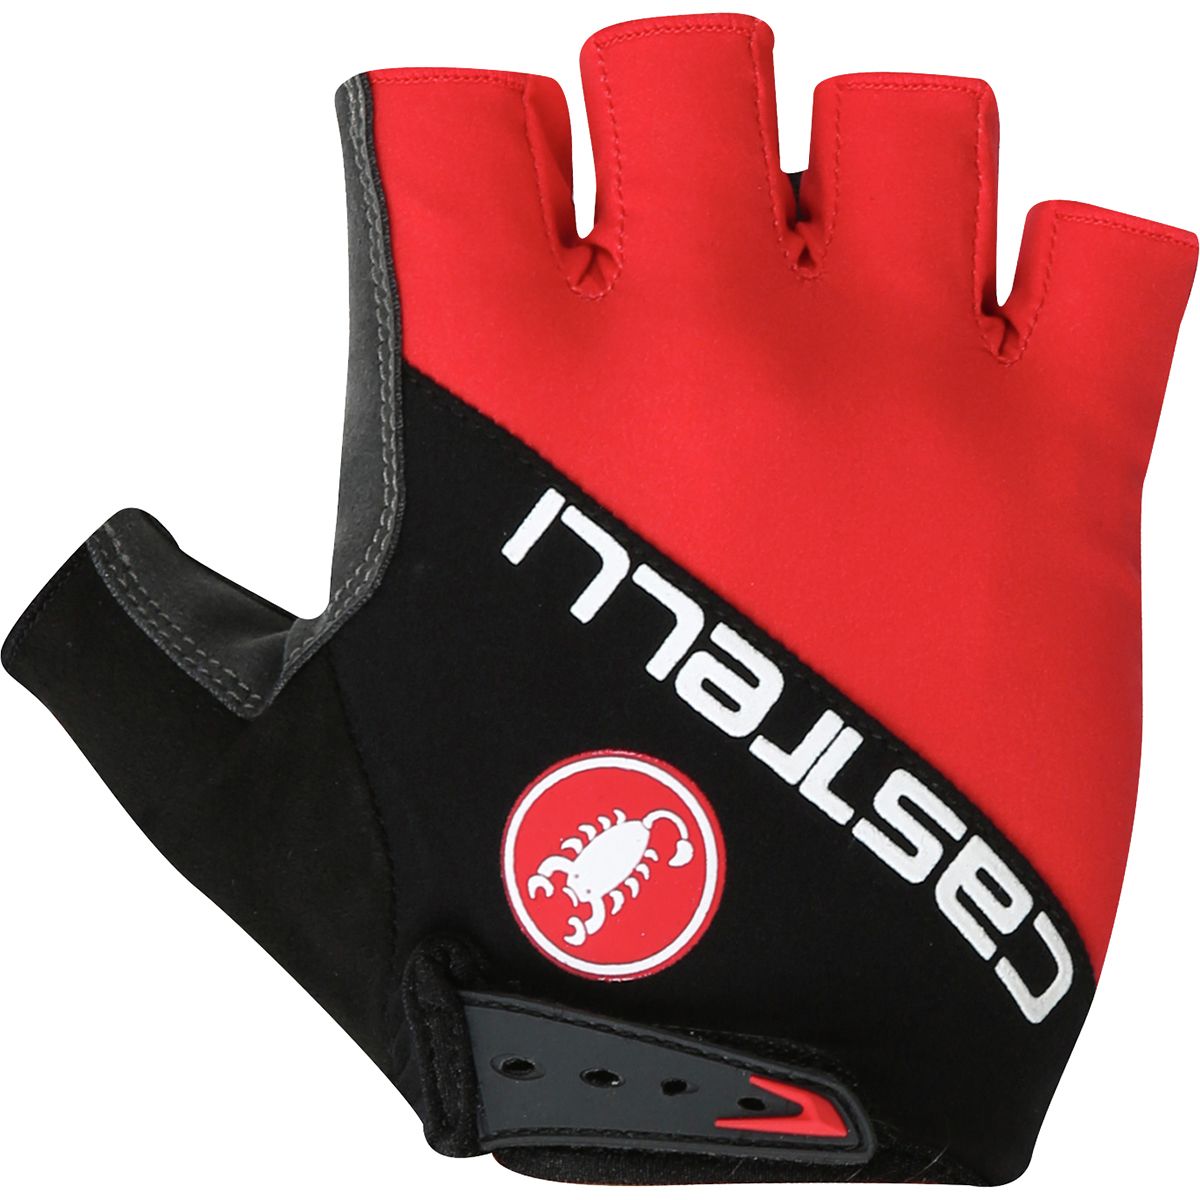 Castelli Adesivo Glove - Men's